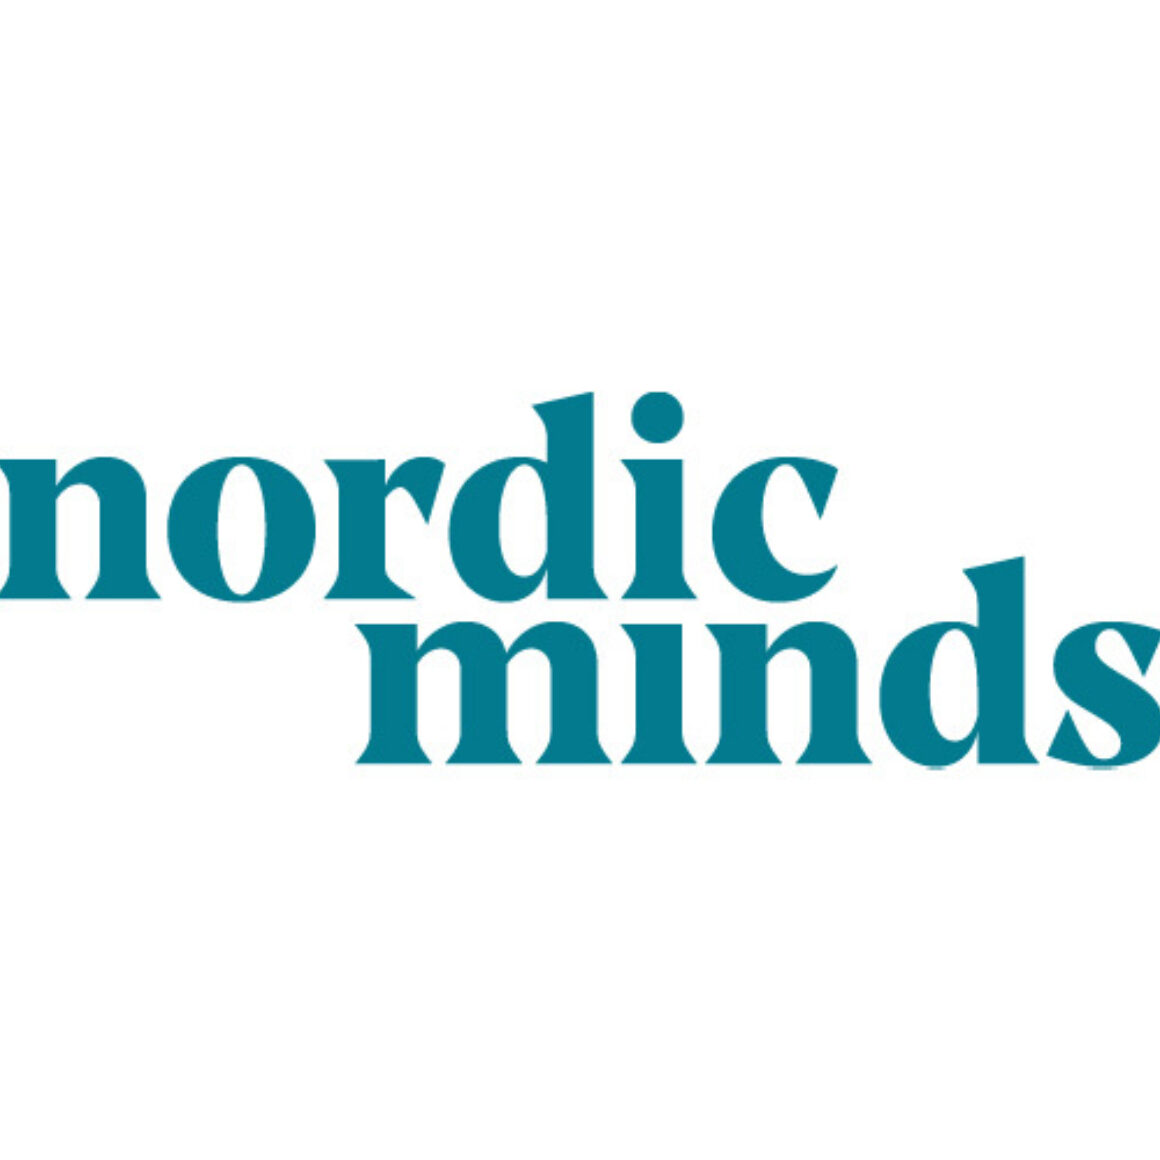 Nordic Leadership rocks!